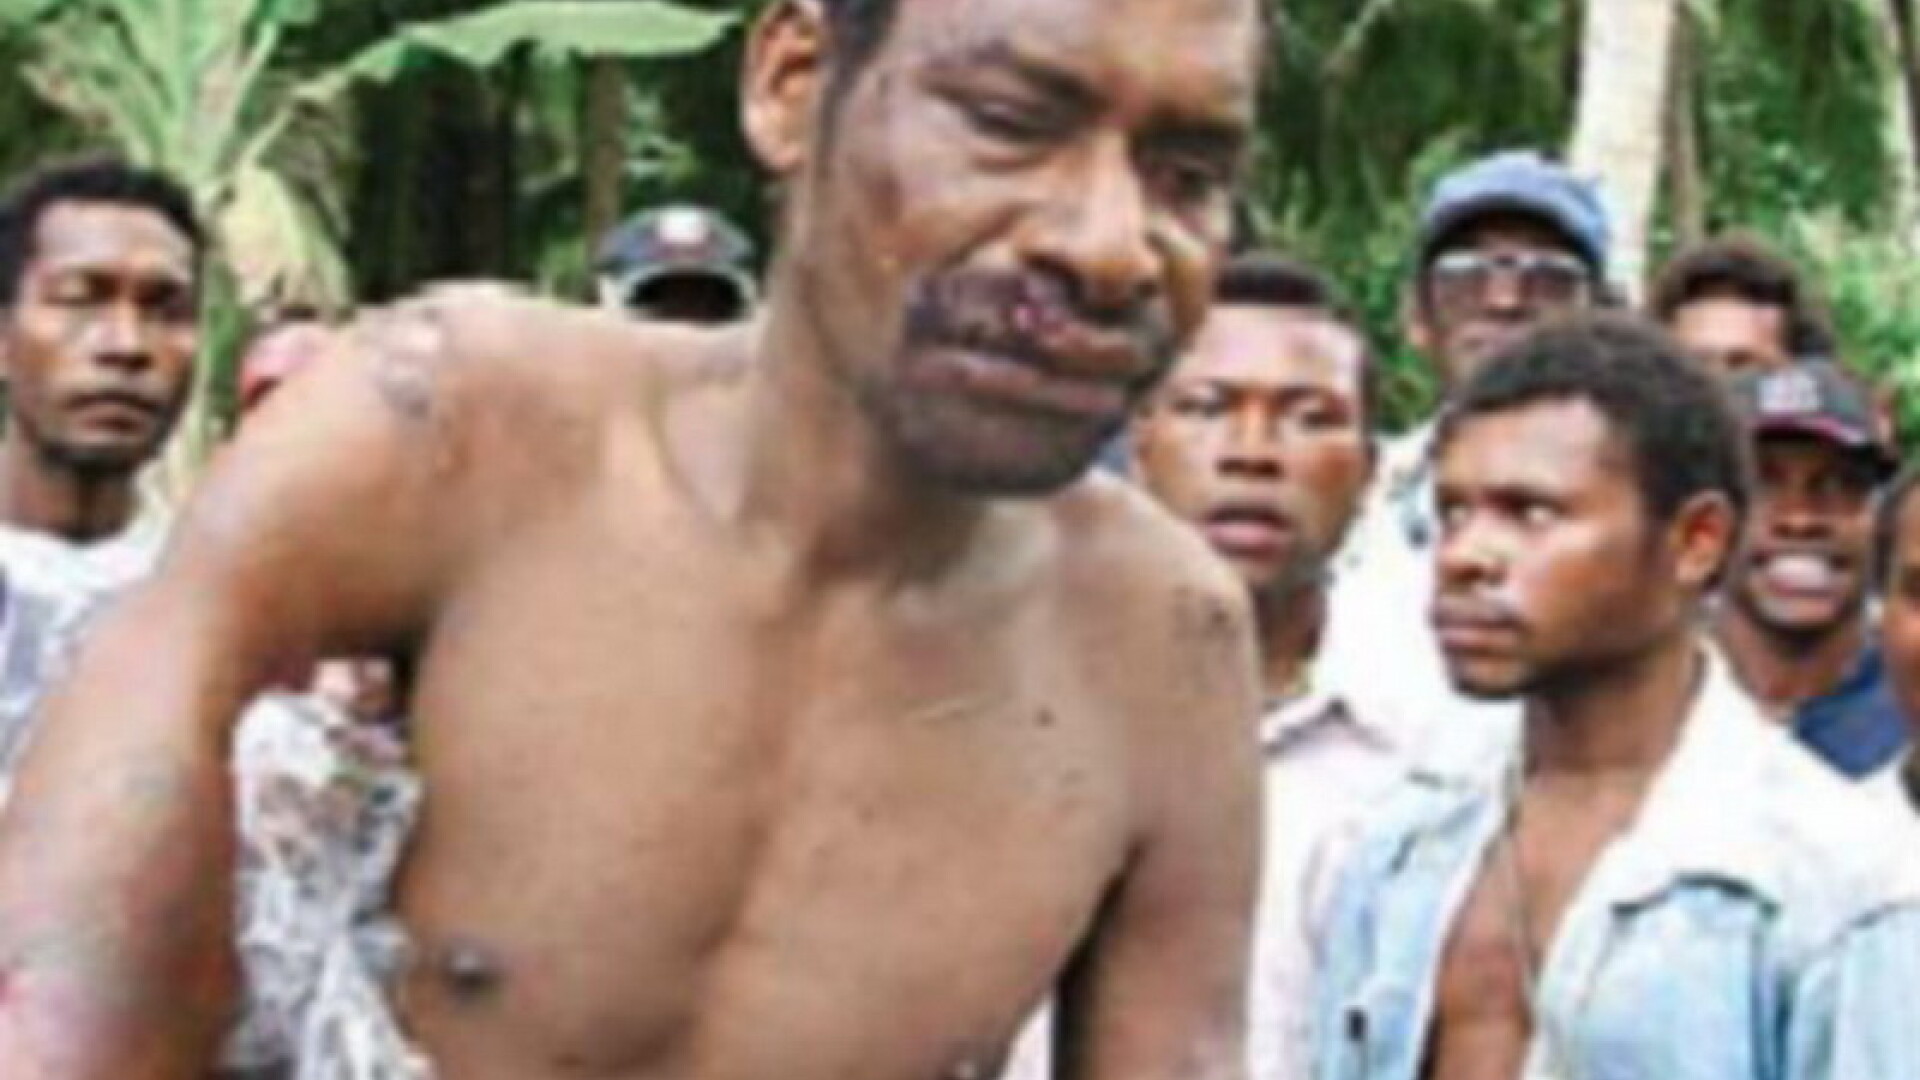 Canibal Papua